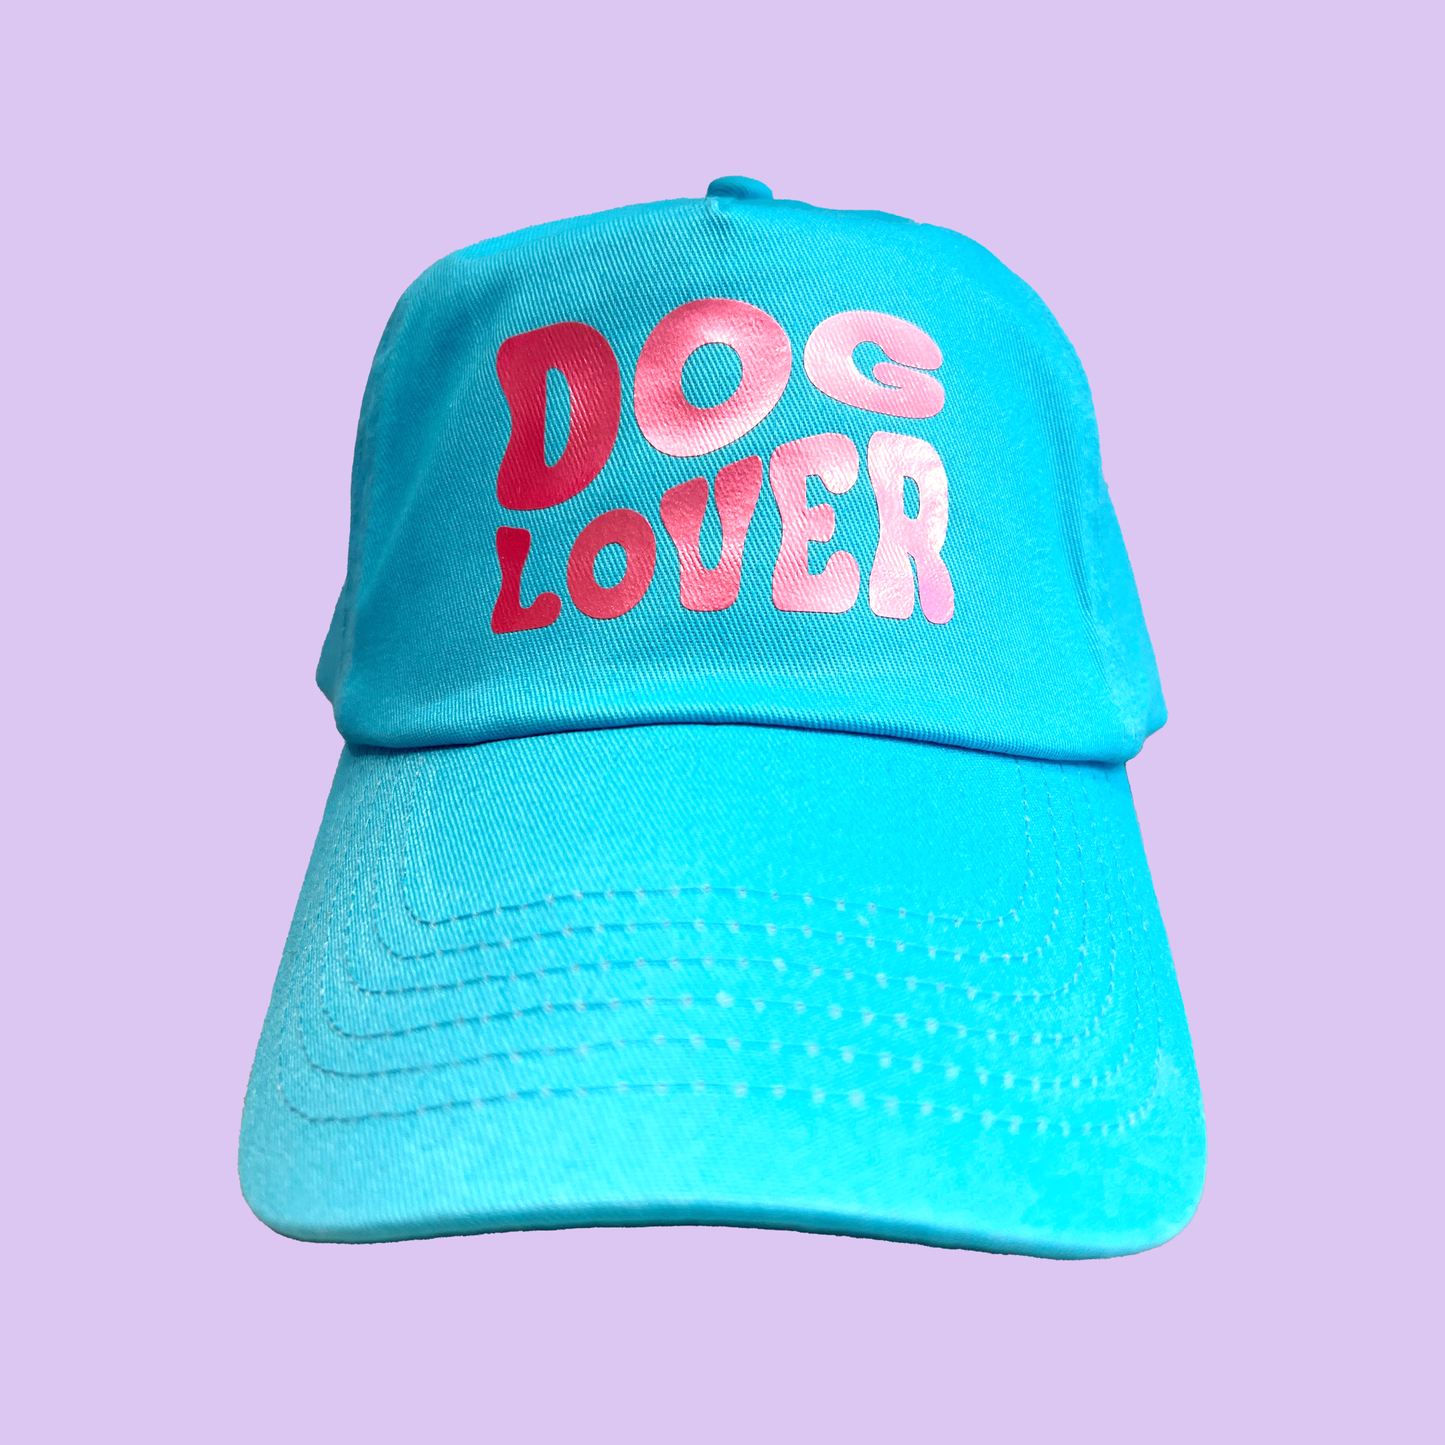 Cappellino "Dog Lover"